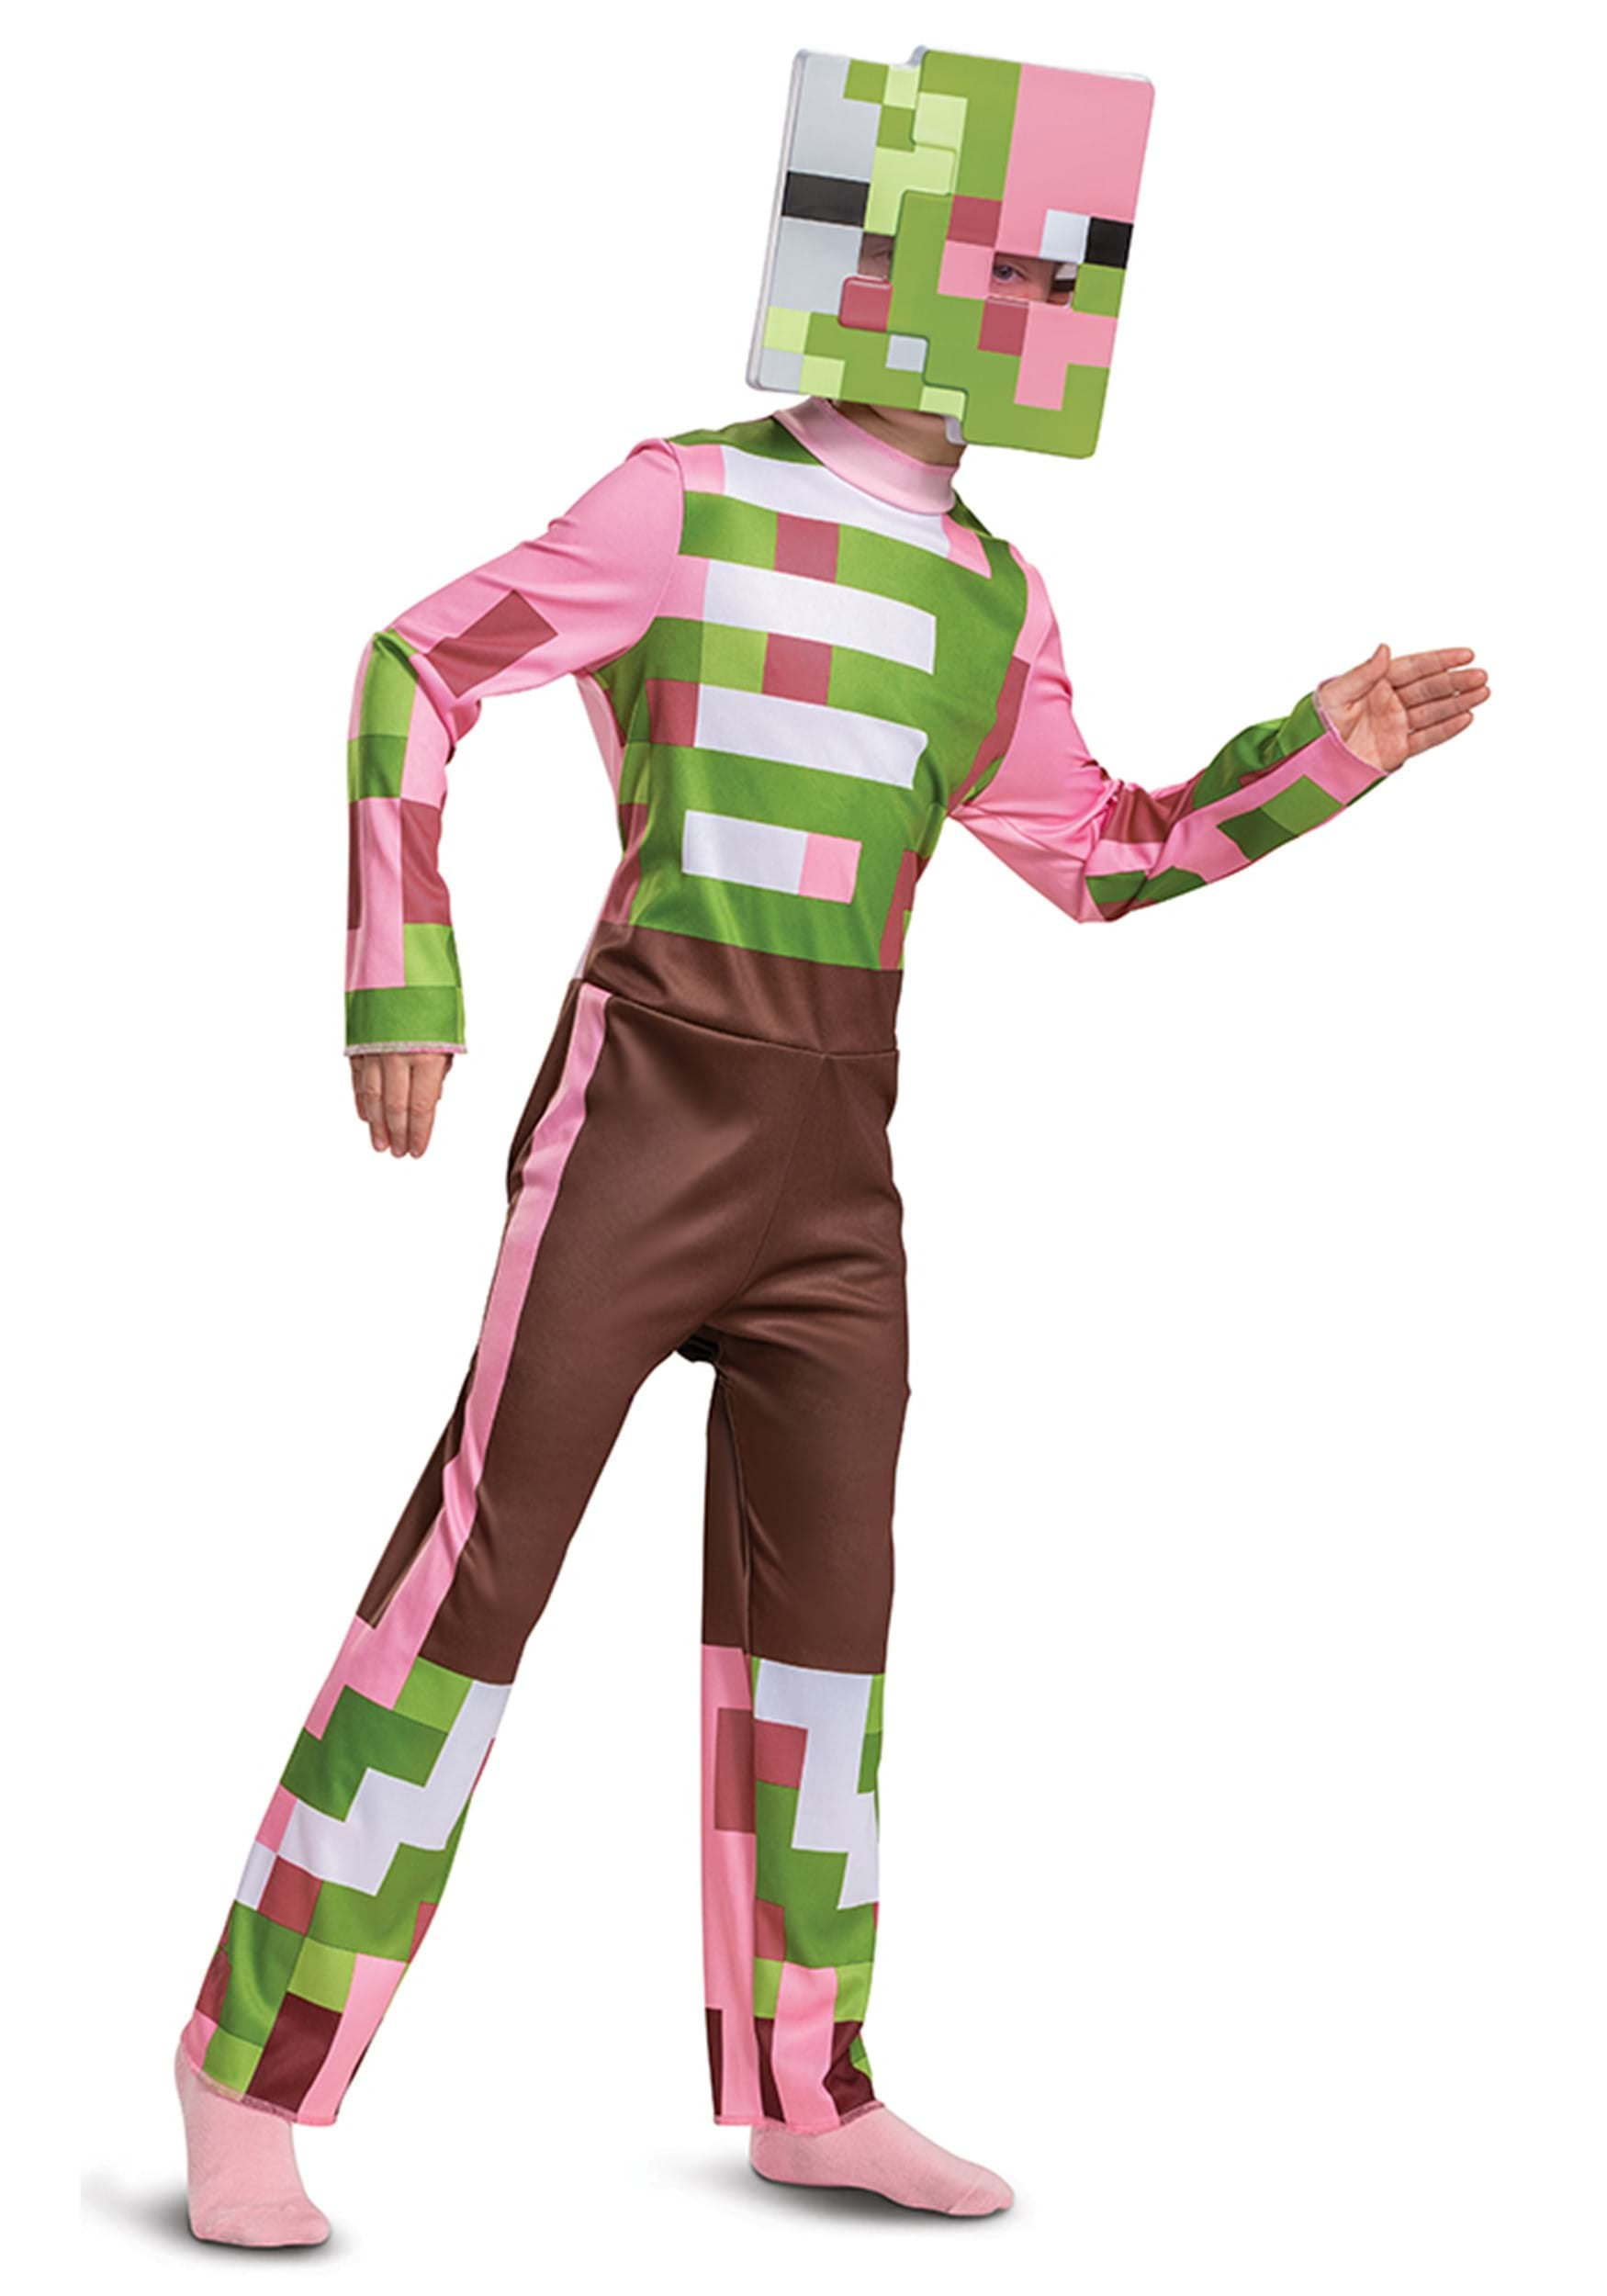 Creeper Classic Minecraft Costume, Green, Large (10-12)